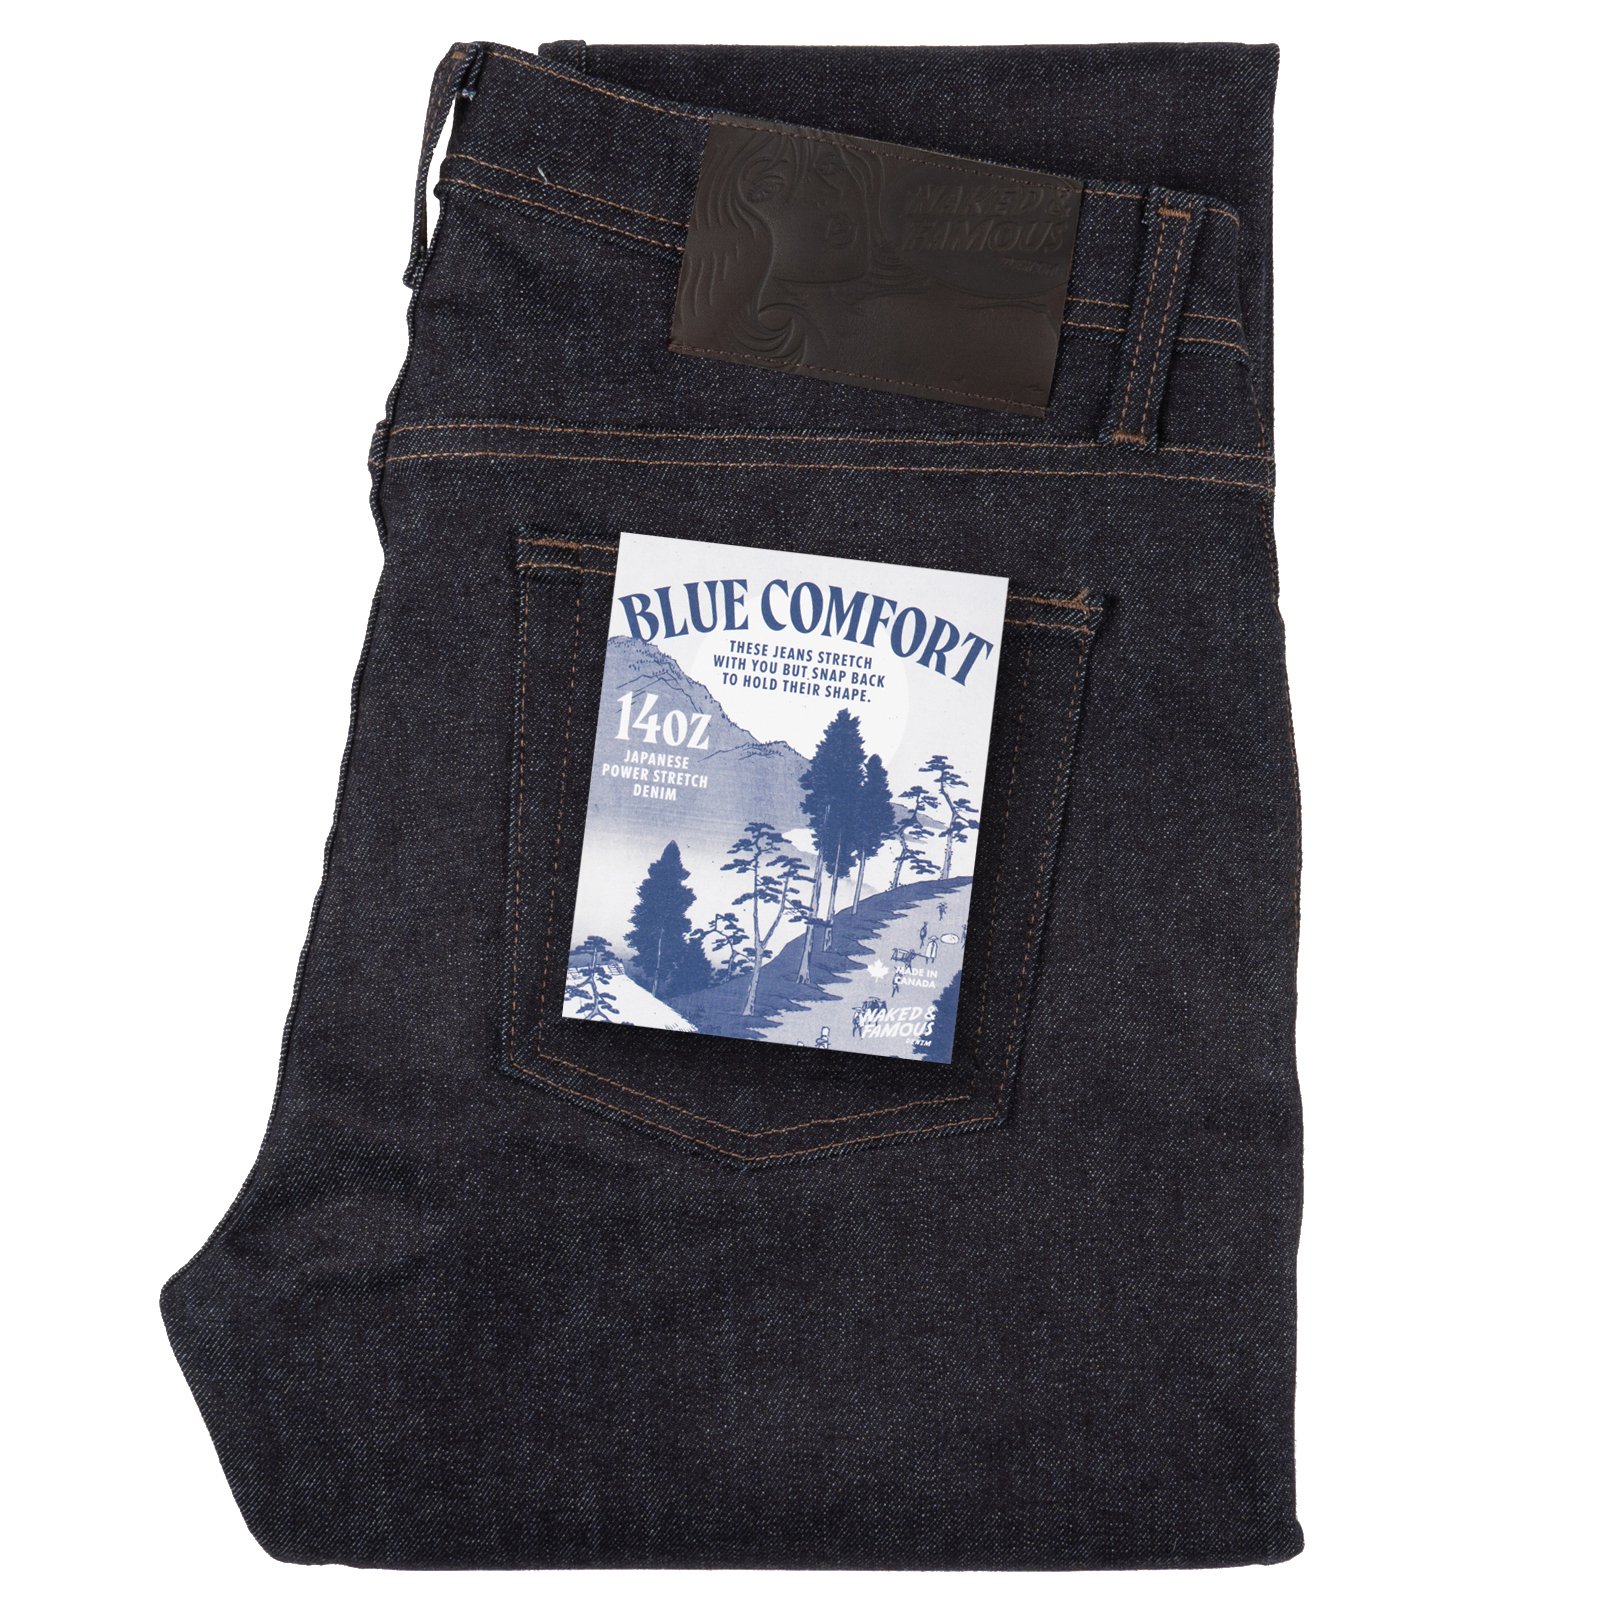  Blue Comfort Stretch Jeans - folded 